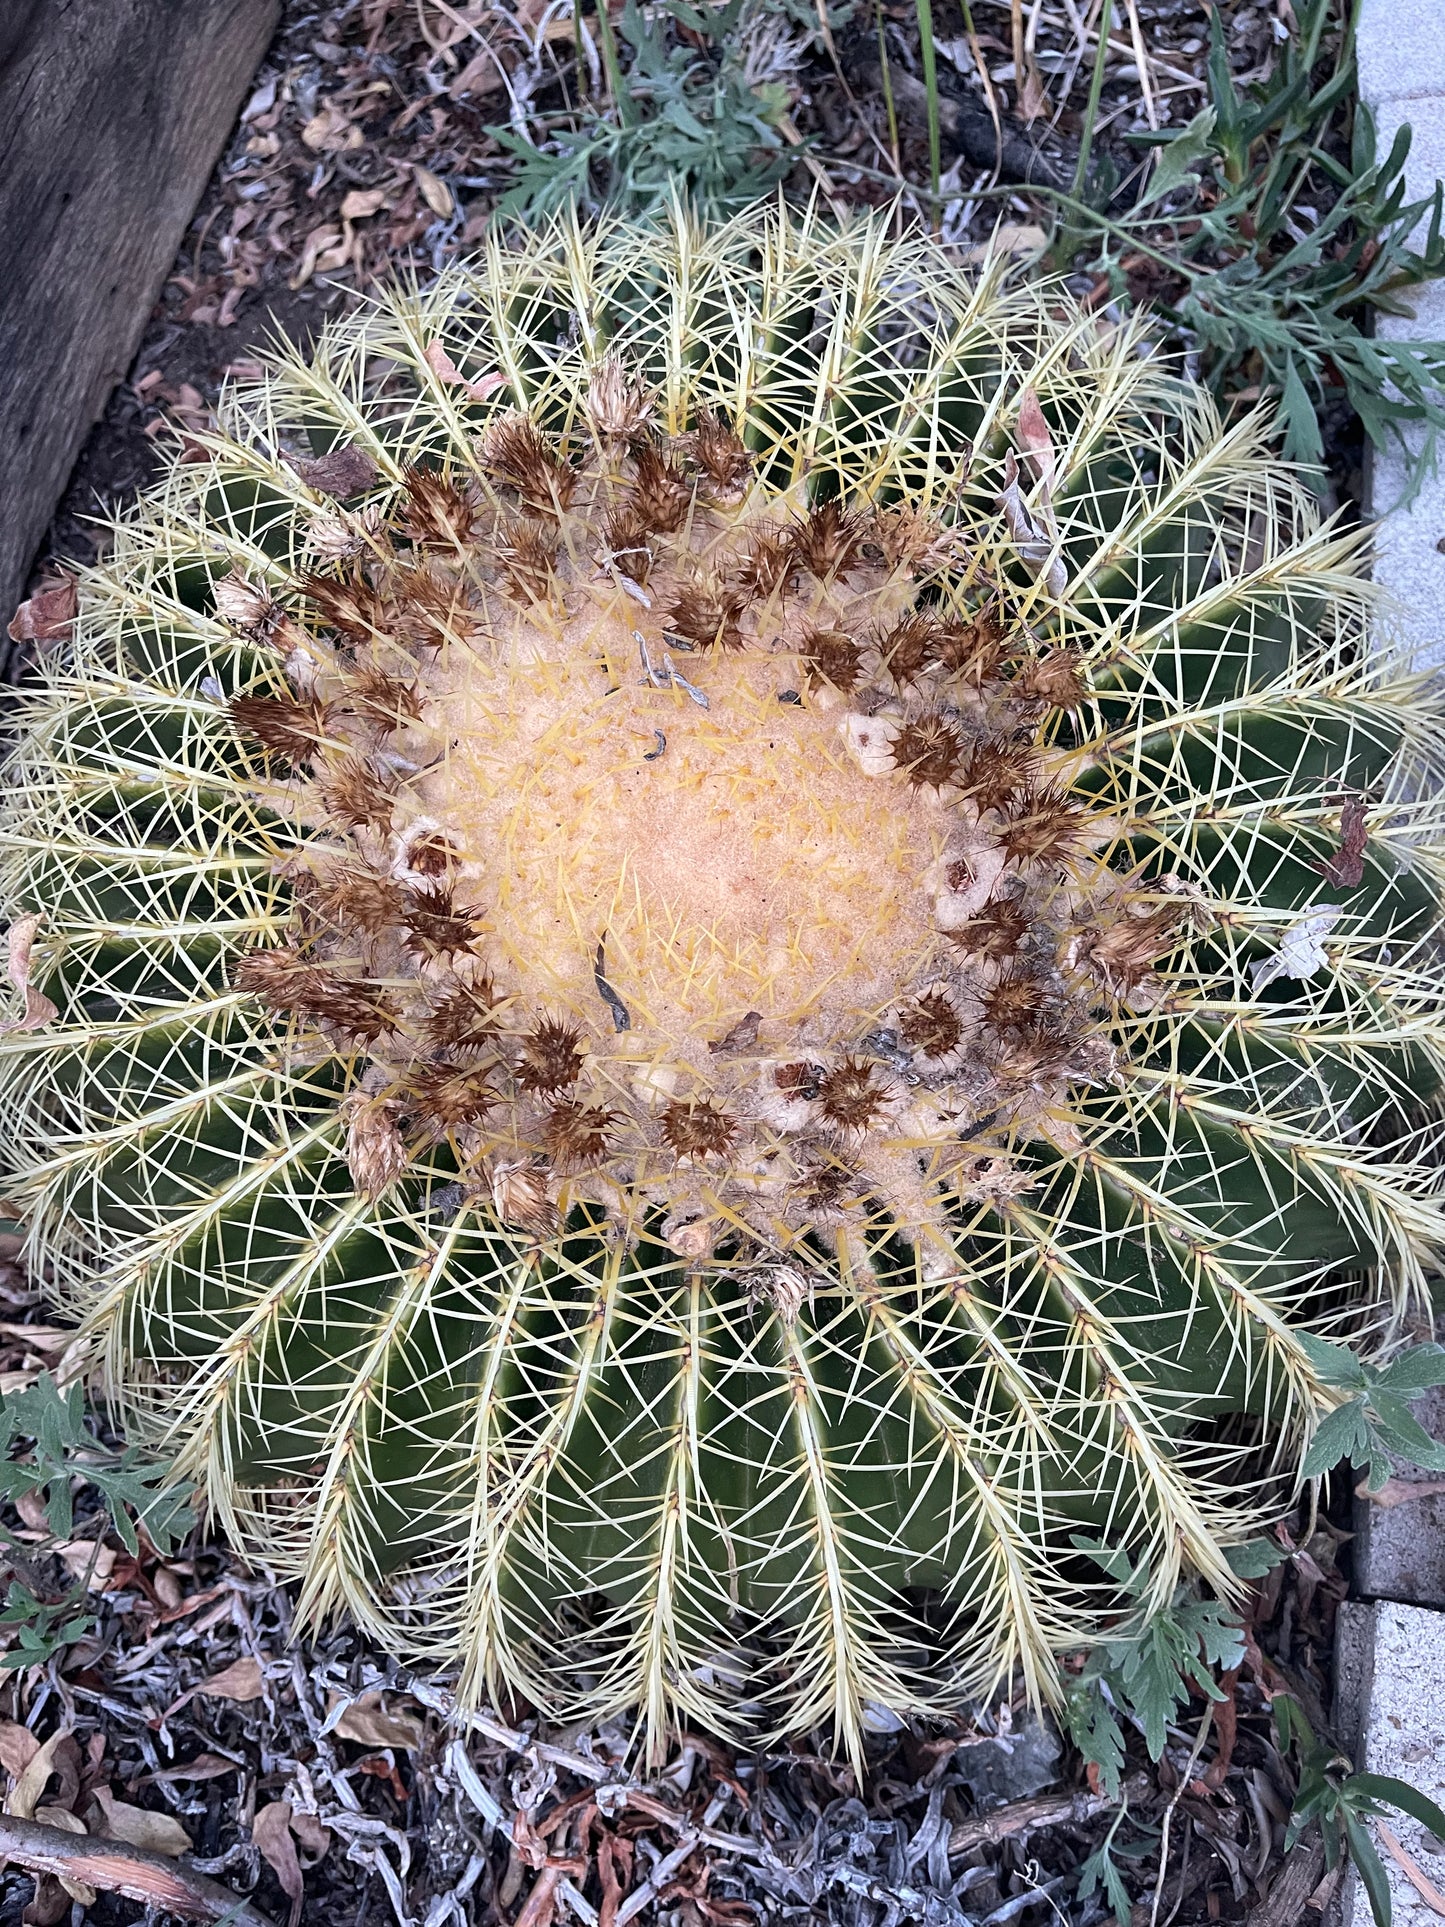 Free golden barrel cactus seeds !